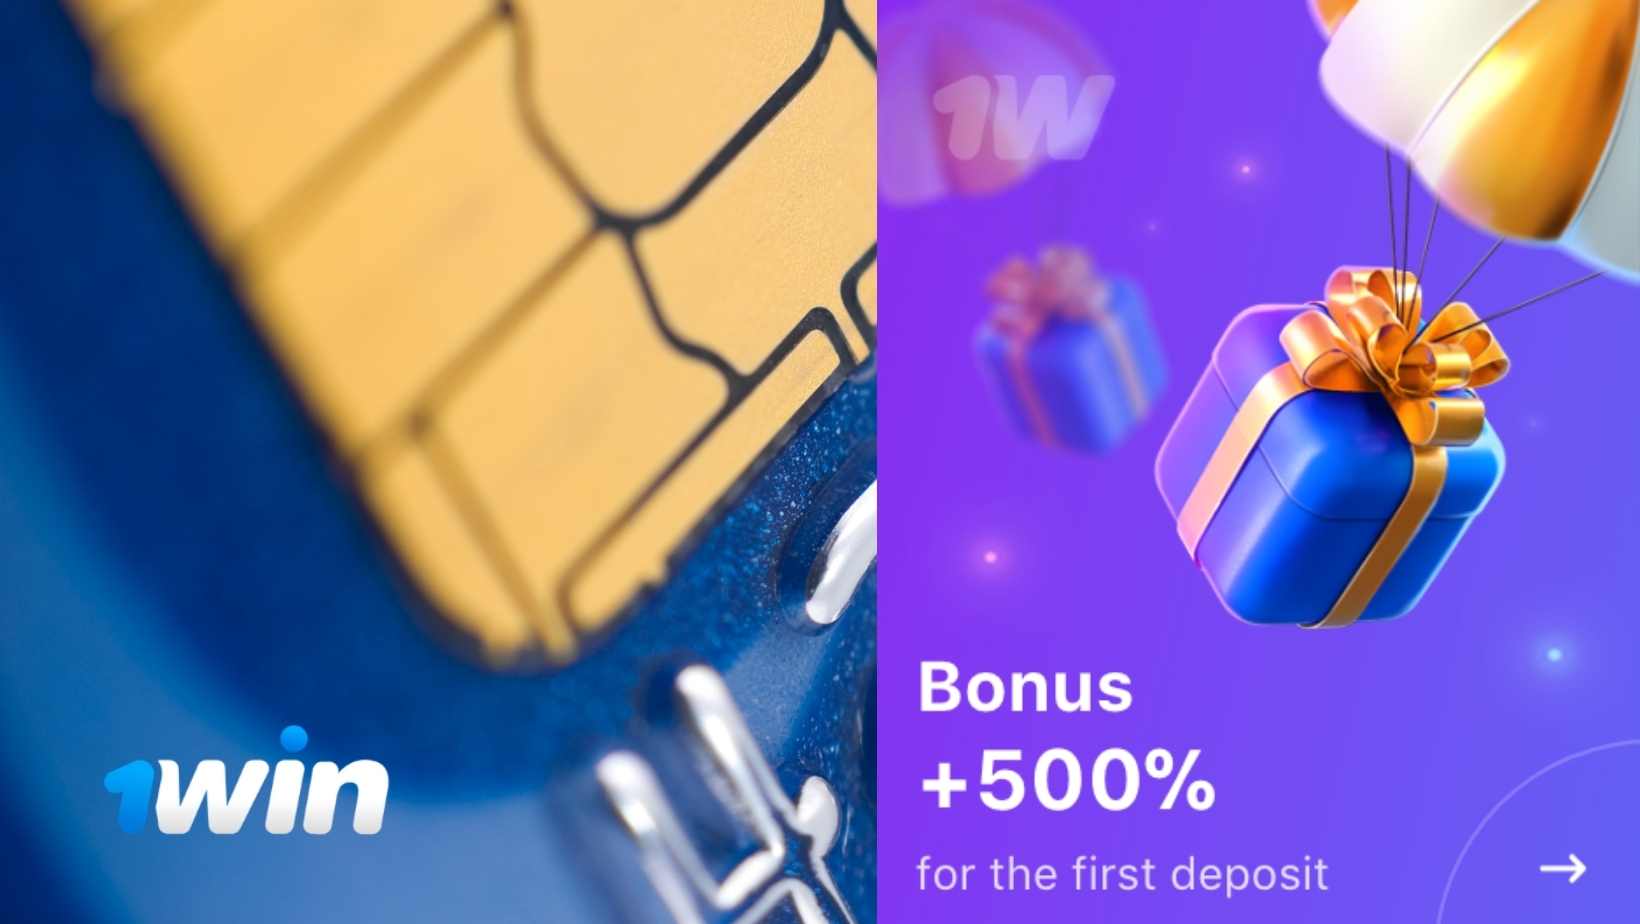 1Win Welcome Bonus on First Deposit